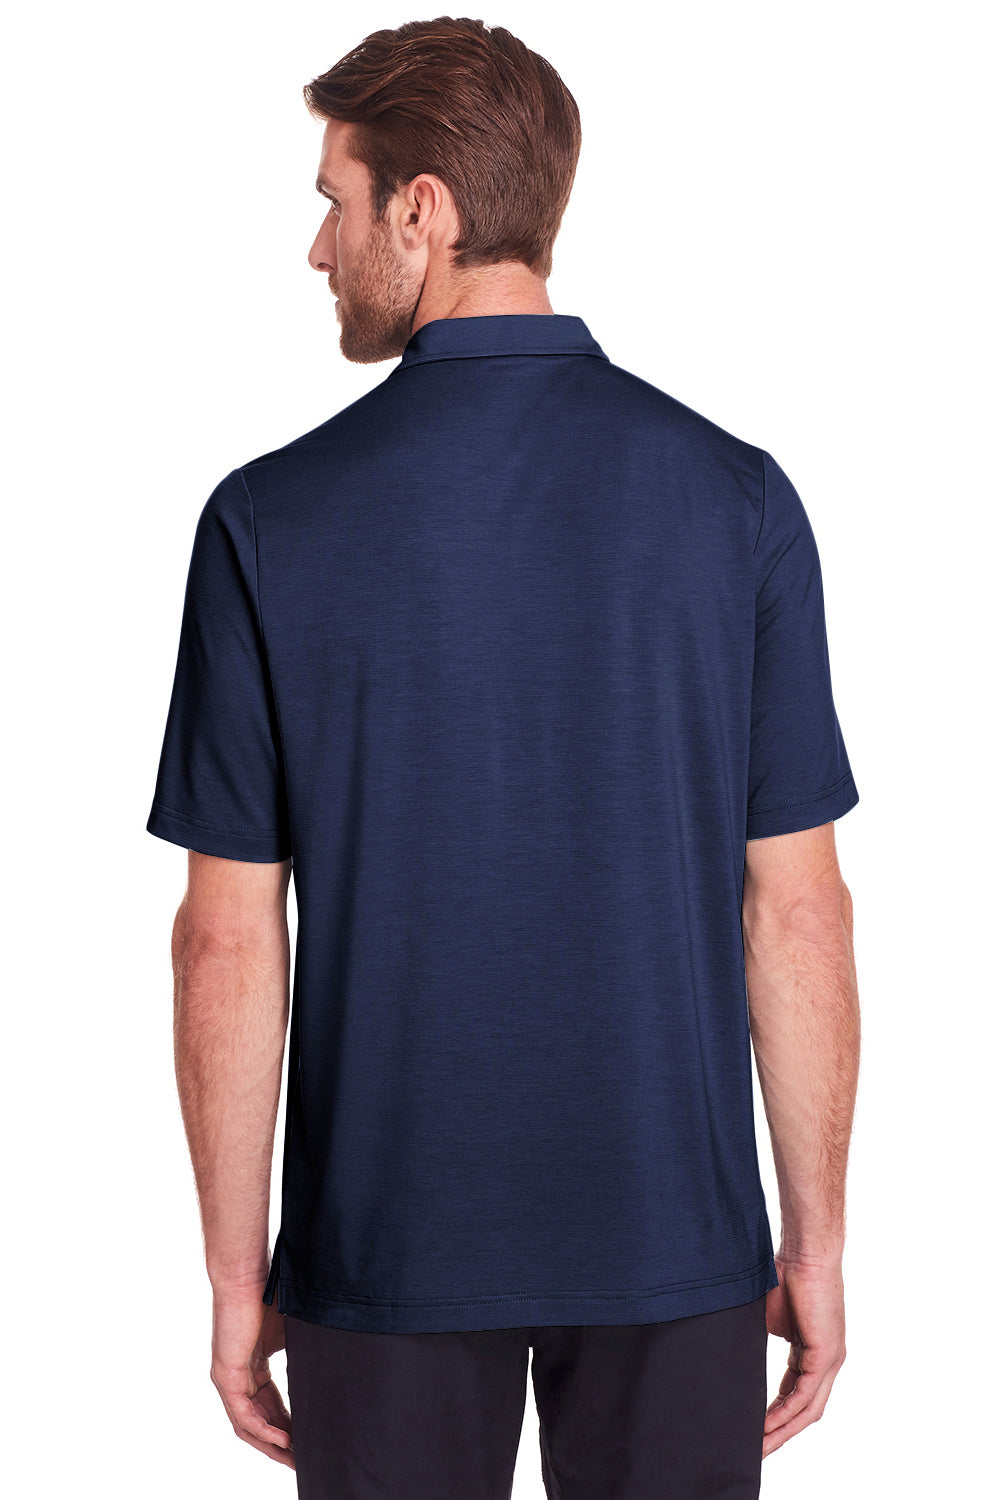 North End NE100 Mens Jaq Performance Moisture Wicking Short Sleeve Polo Shirt Navy Blue Back